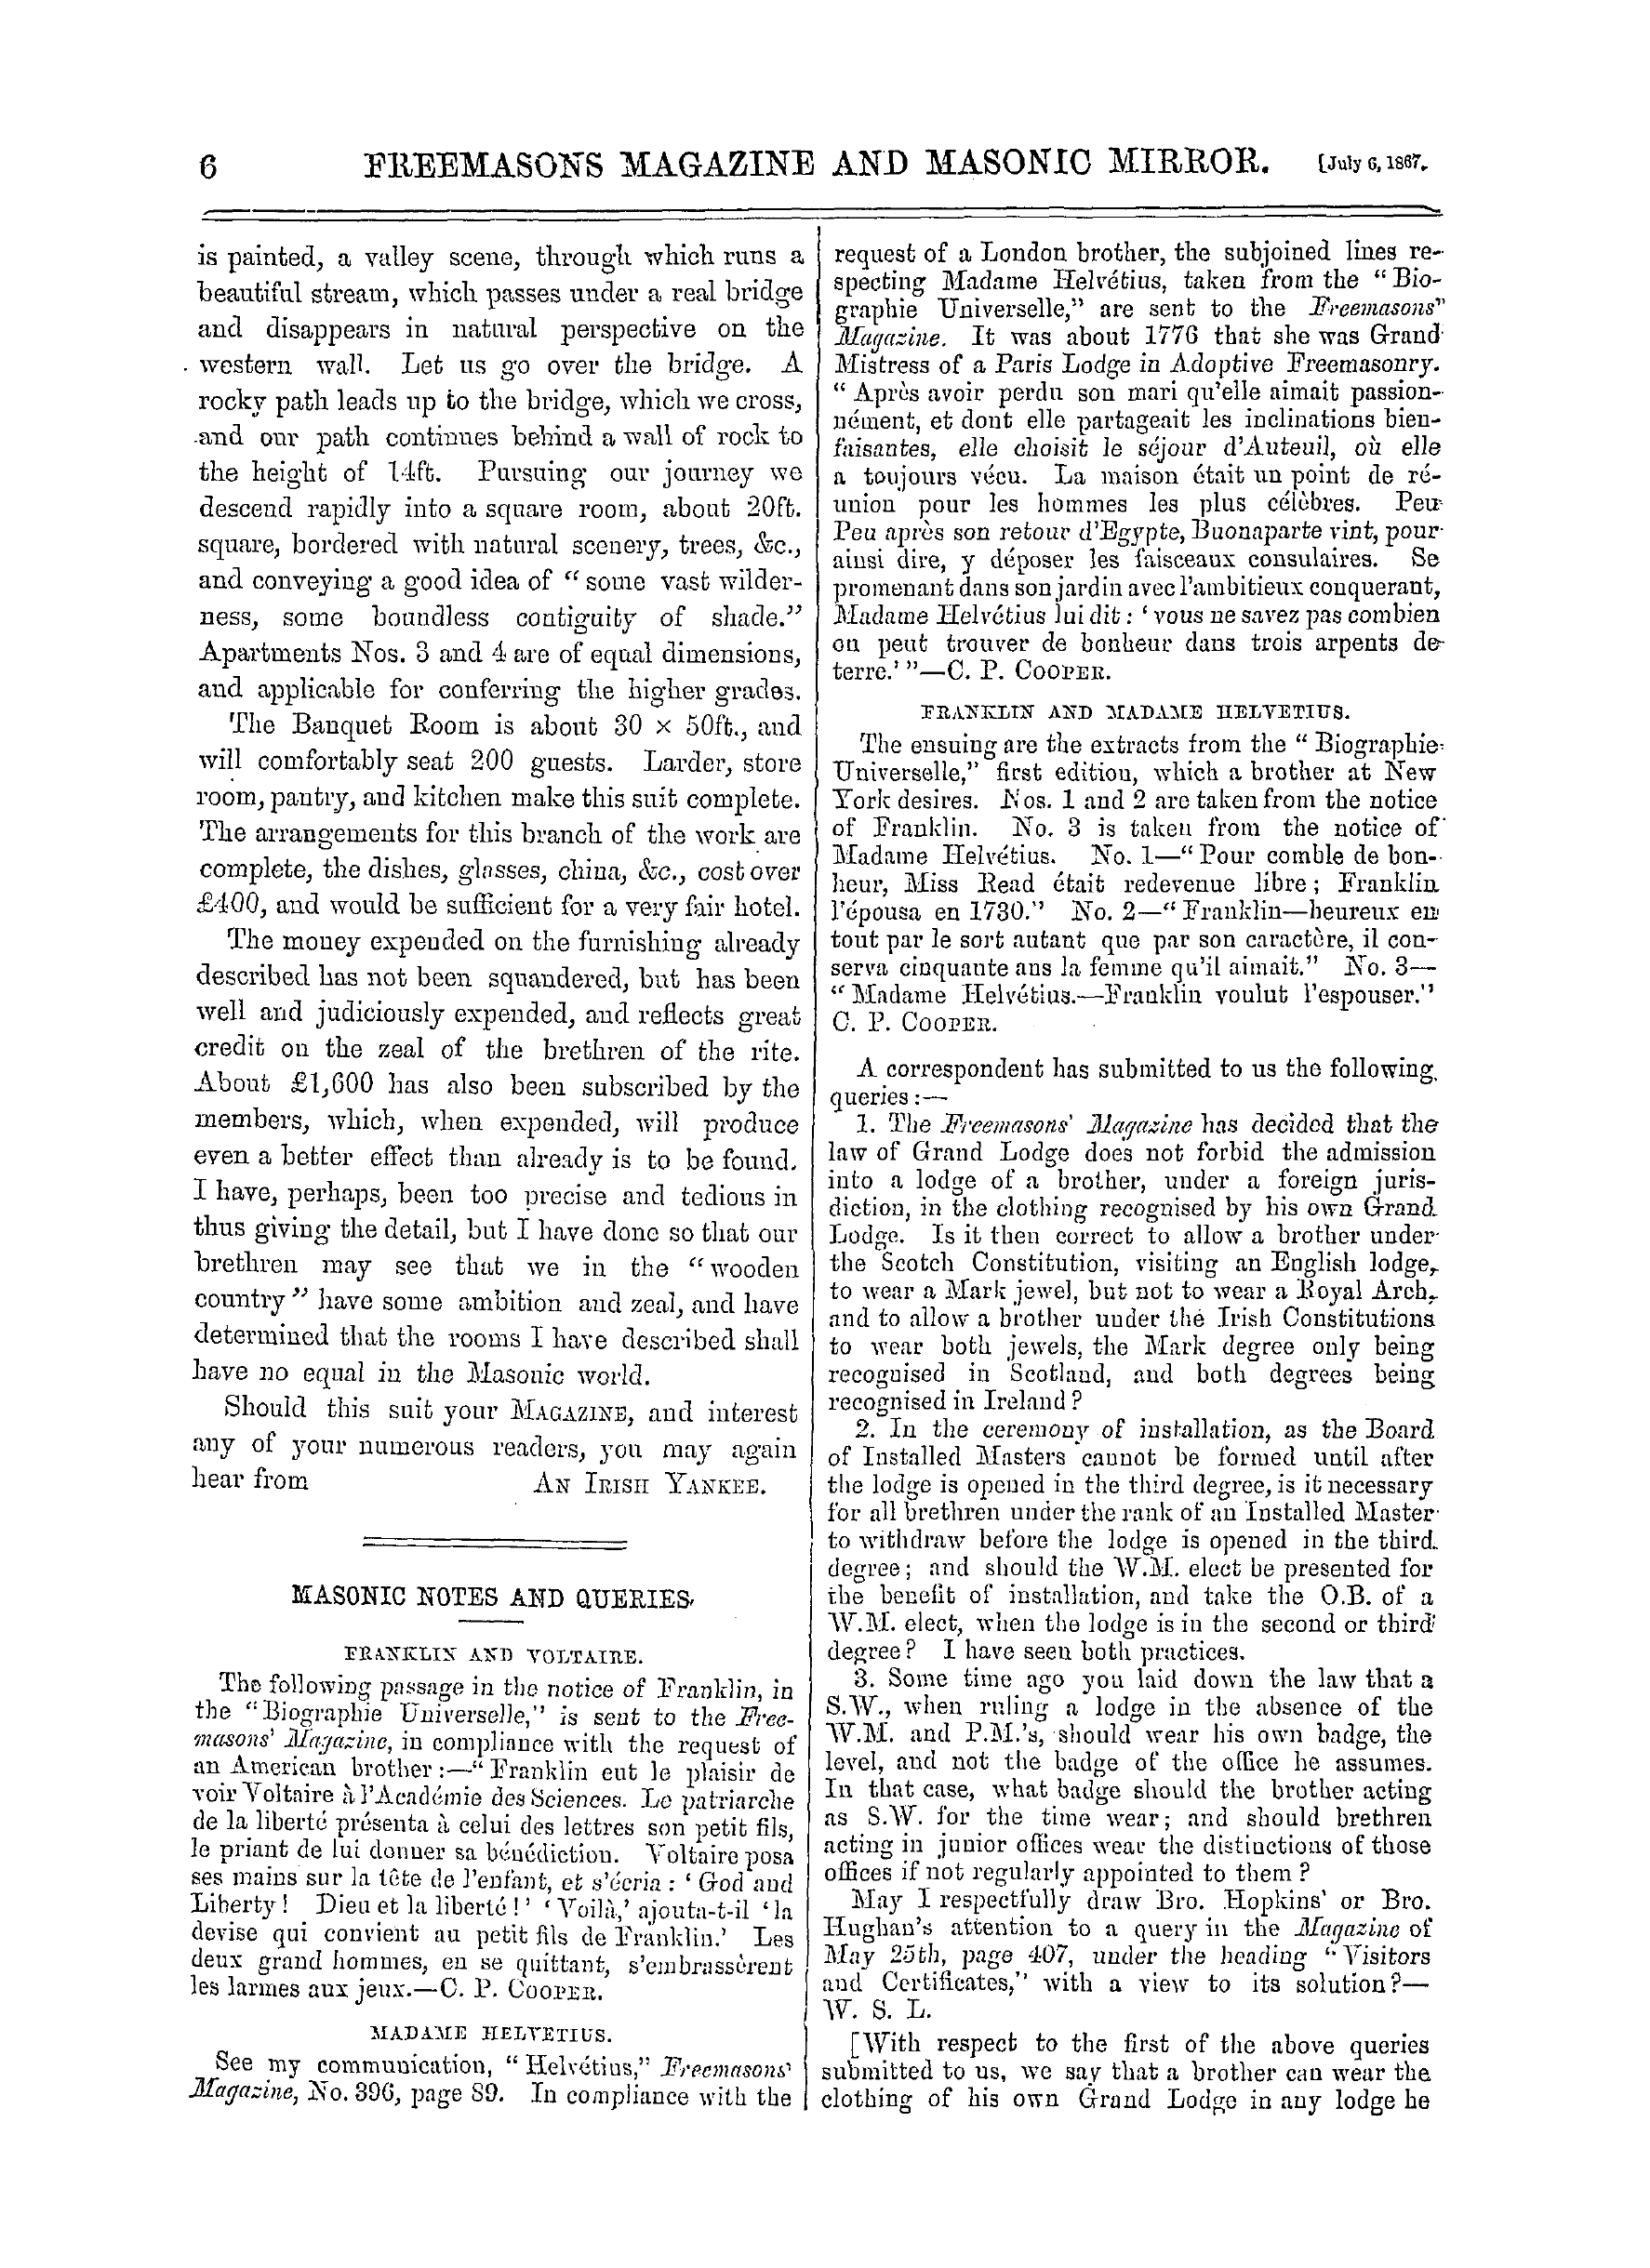 The Freemasons' Monthly Magazine: 1867-07-06 - Visit To Cincinnati, Ohio.